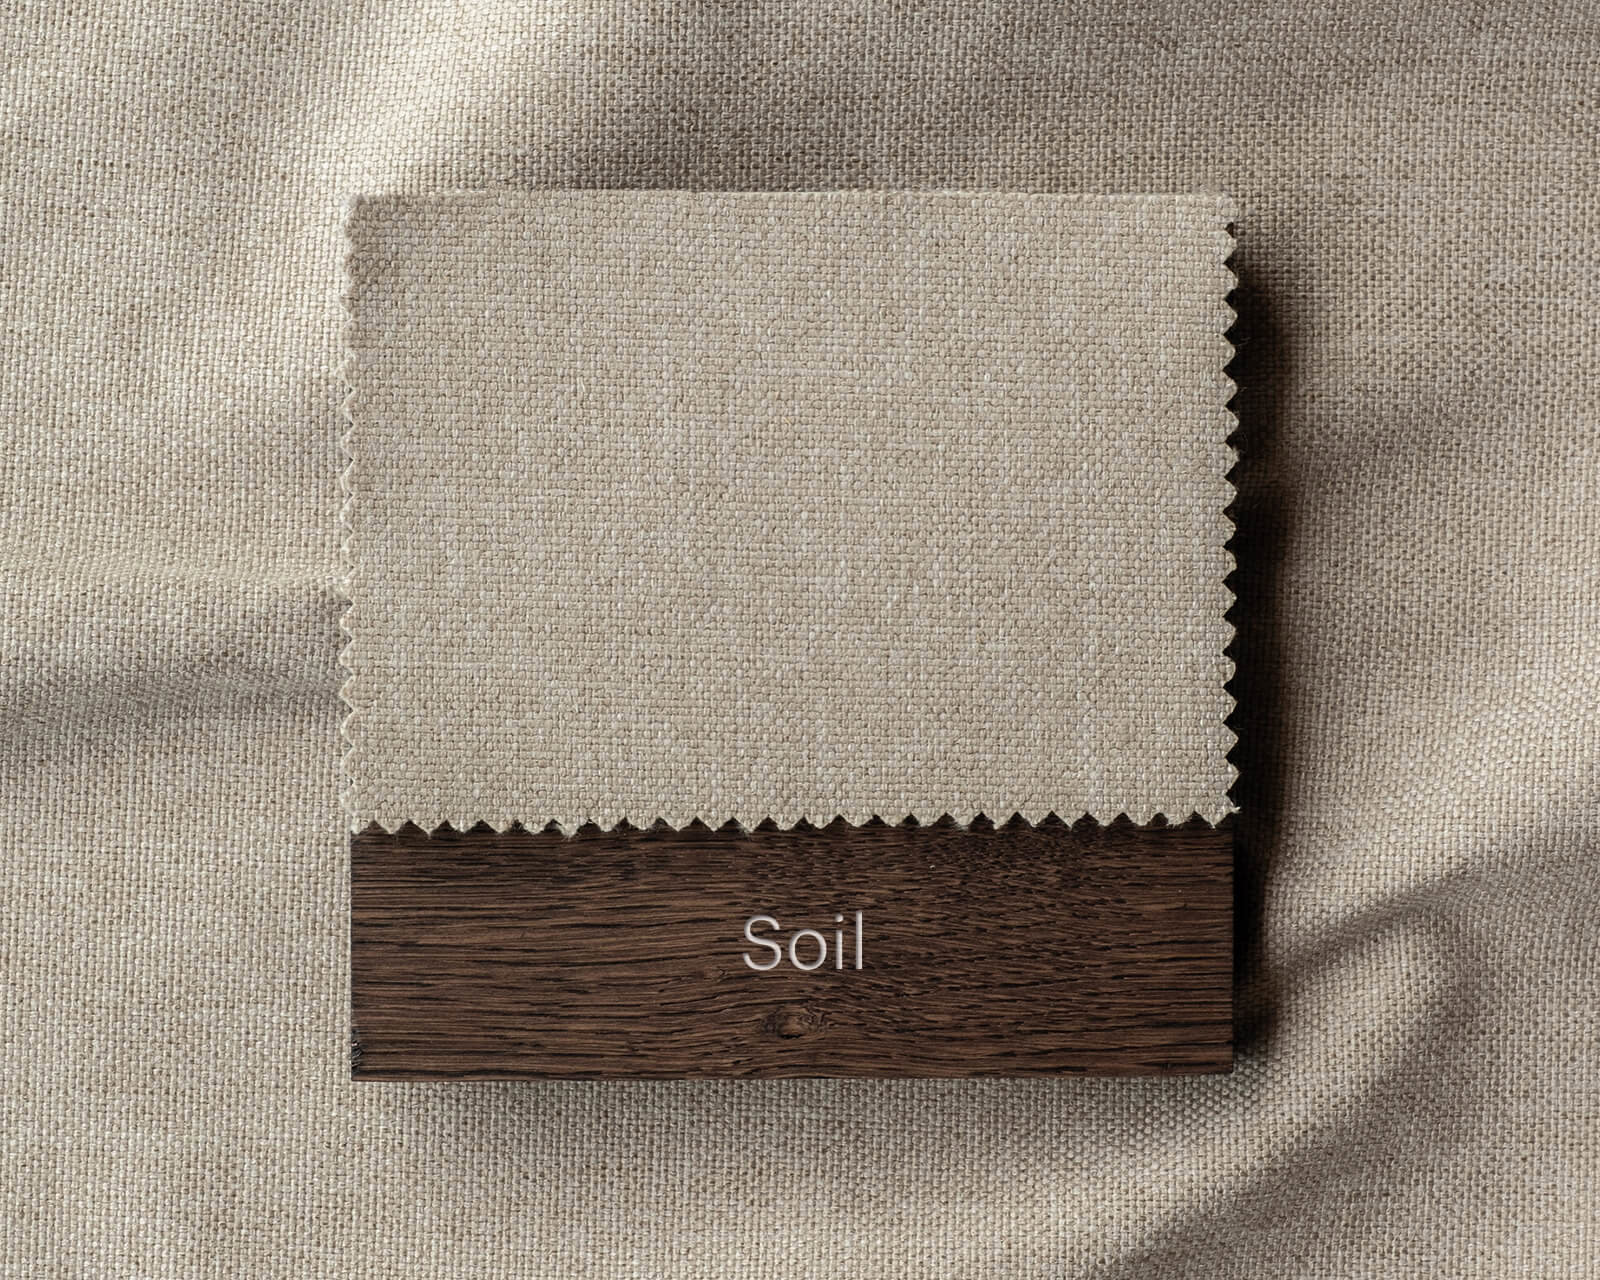 TDSChoice-Soil-1600x1280